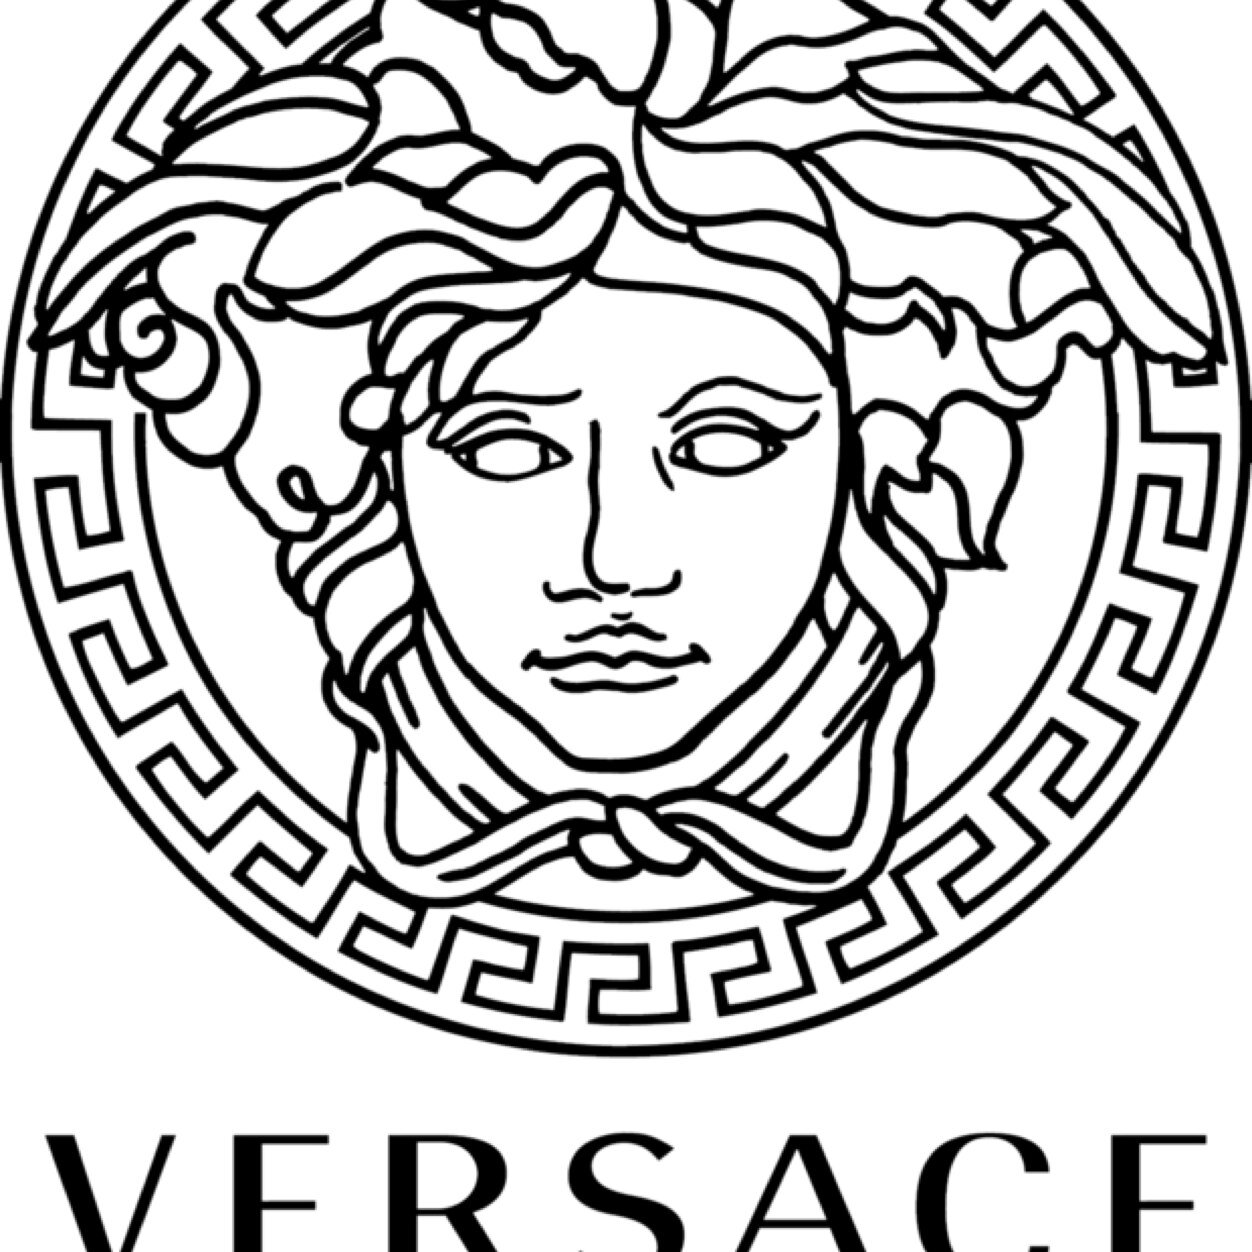 Attack of the V team server. Versace versace versace.